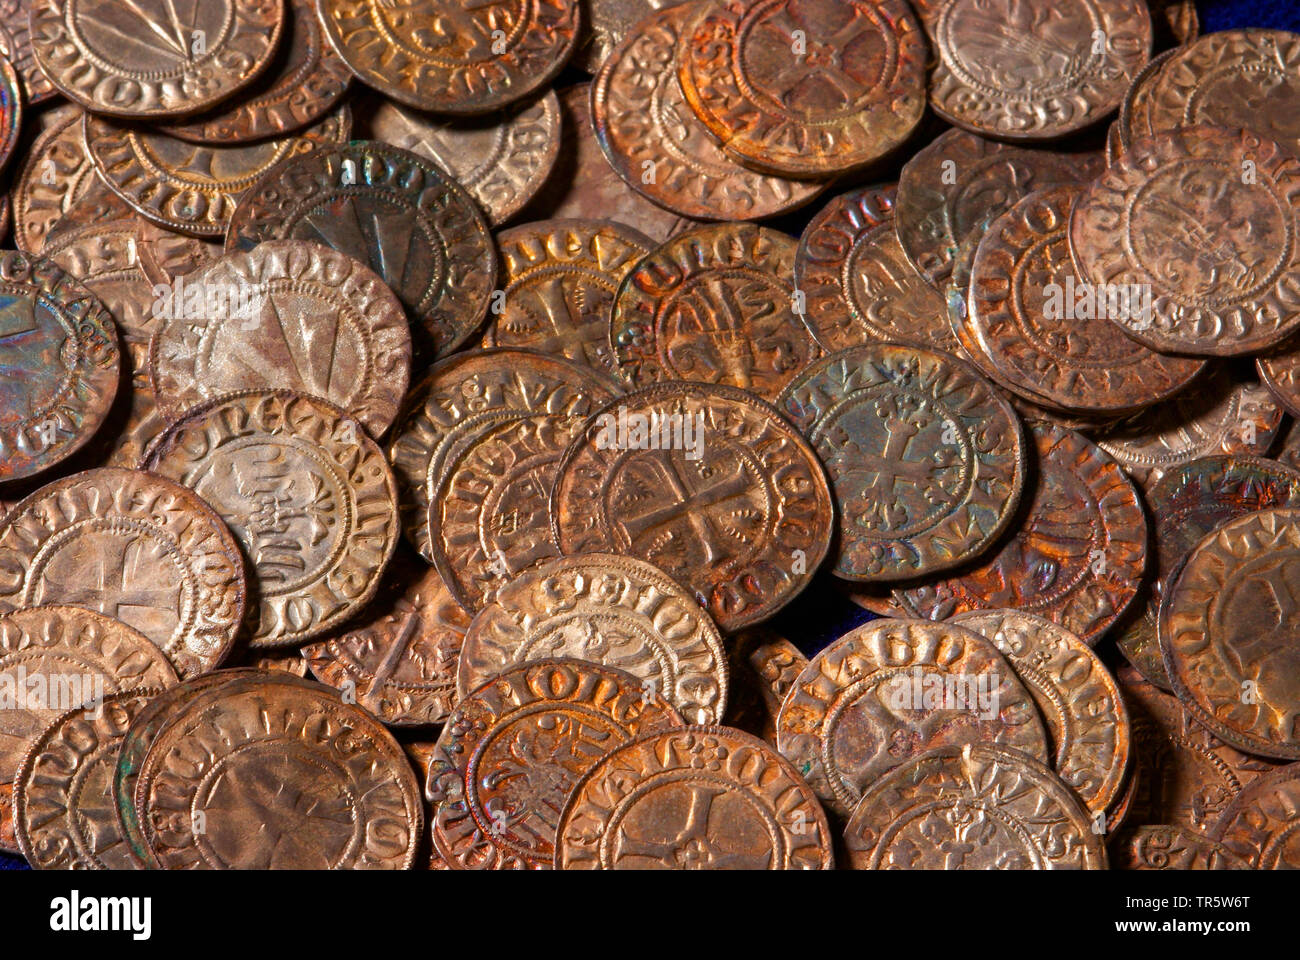 Monete D'argento Immagini e Fotos Stock - Alamy